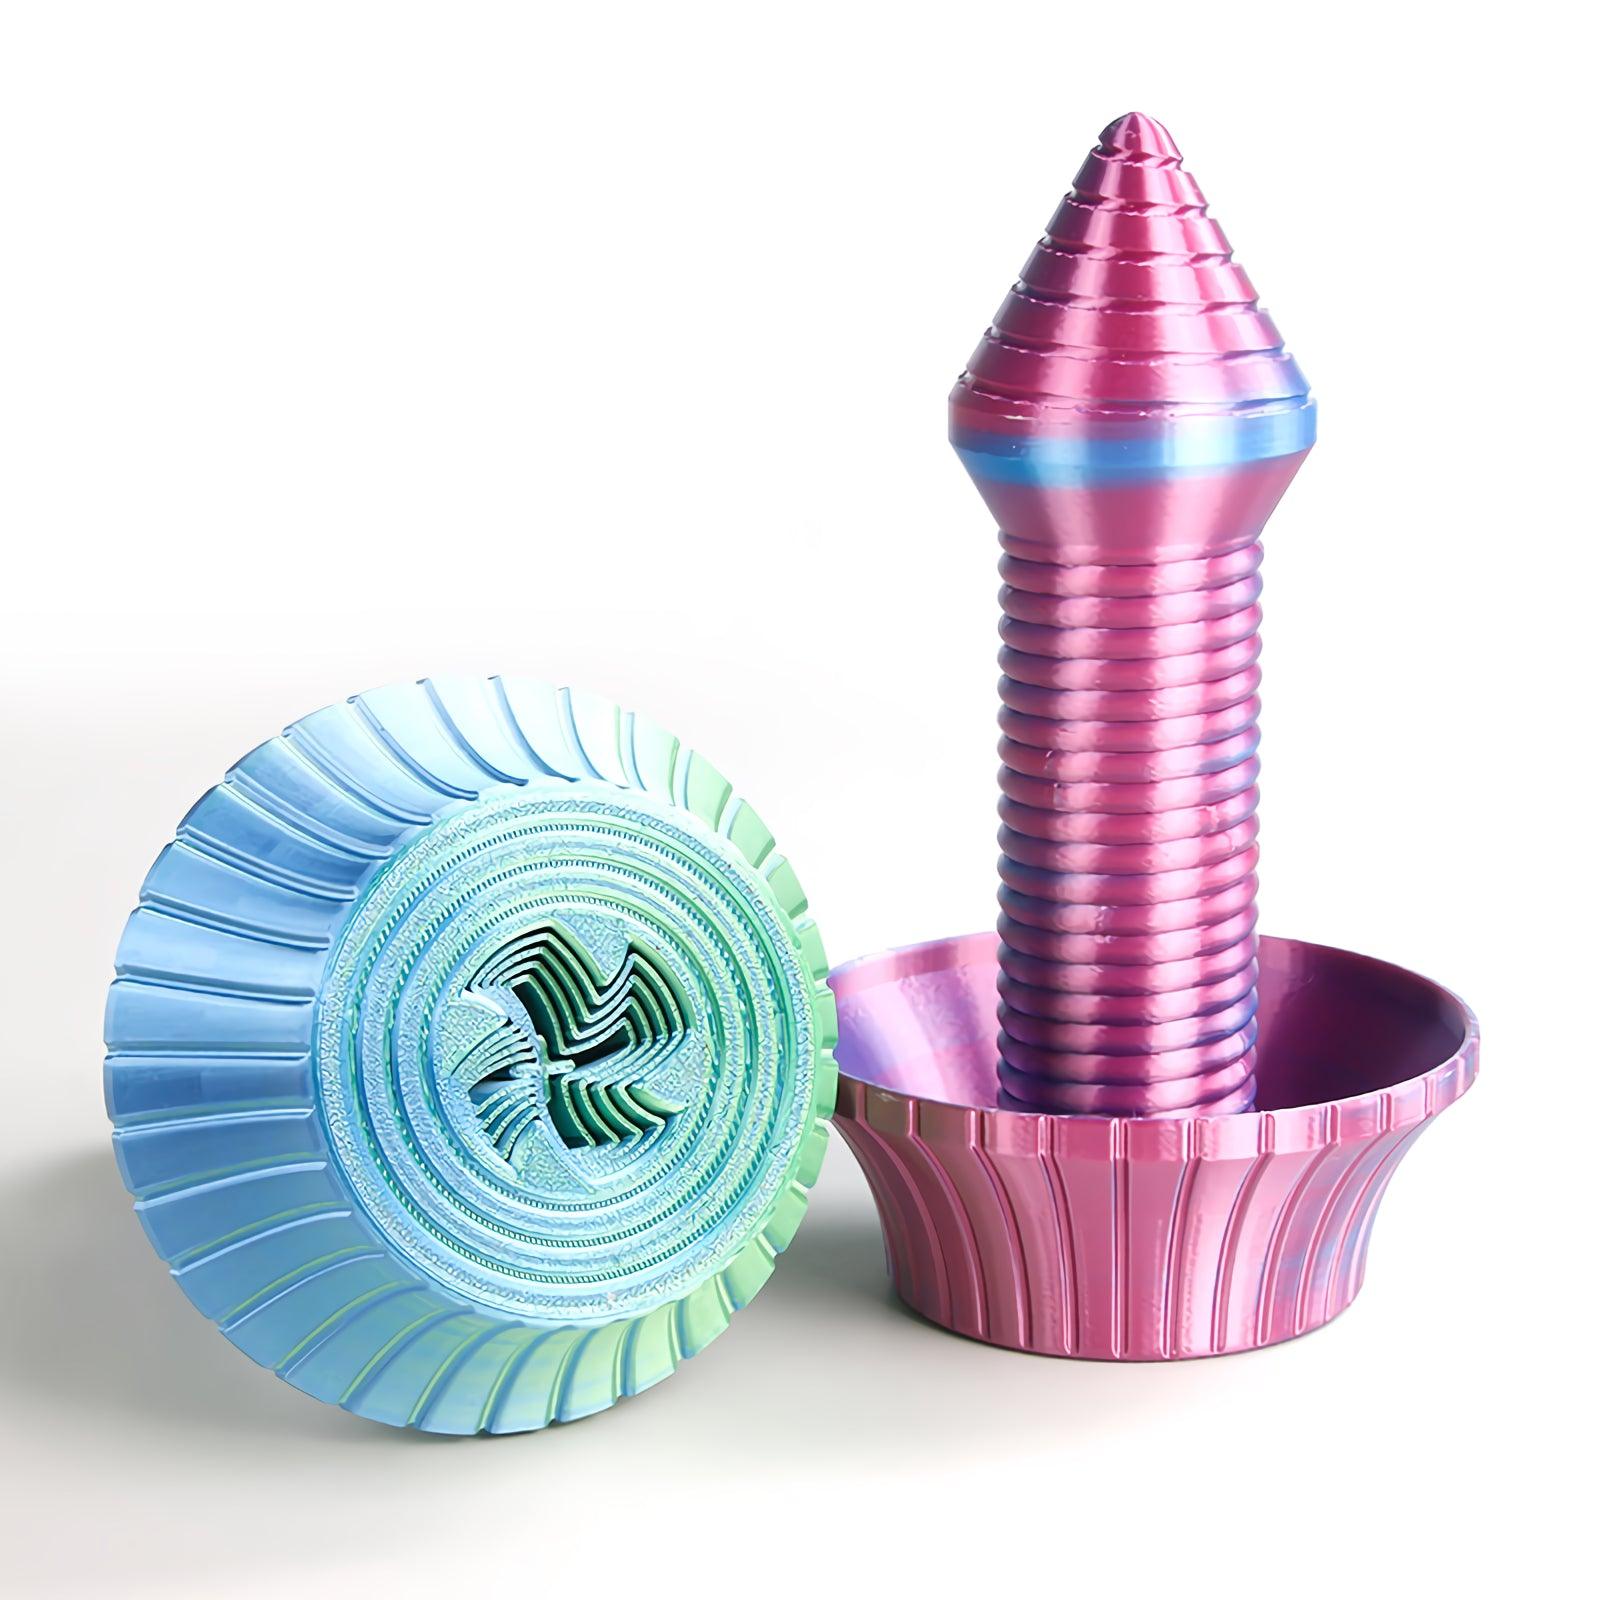 3D Printed Stylish Spiral Sword Fidget Toy Gravity Knife Toy – PANSEKtoy